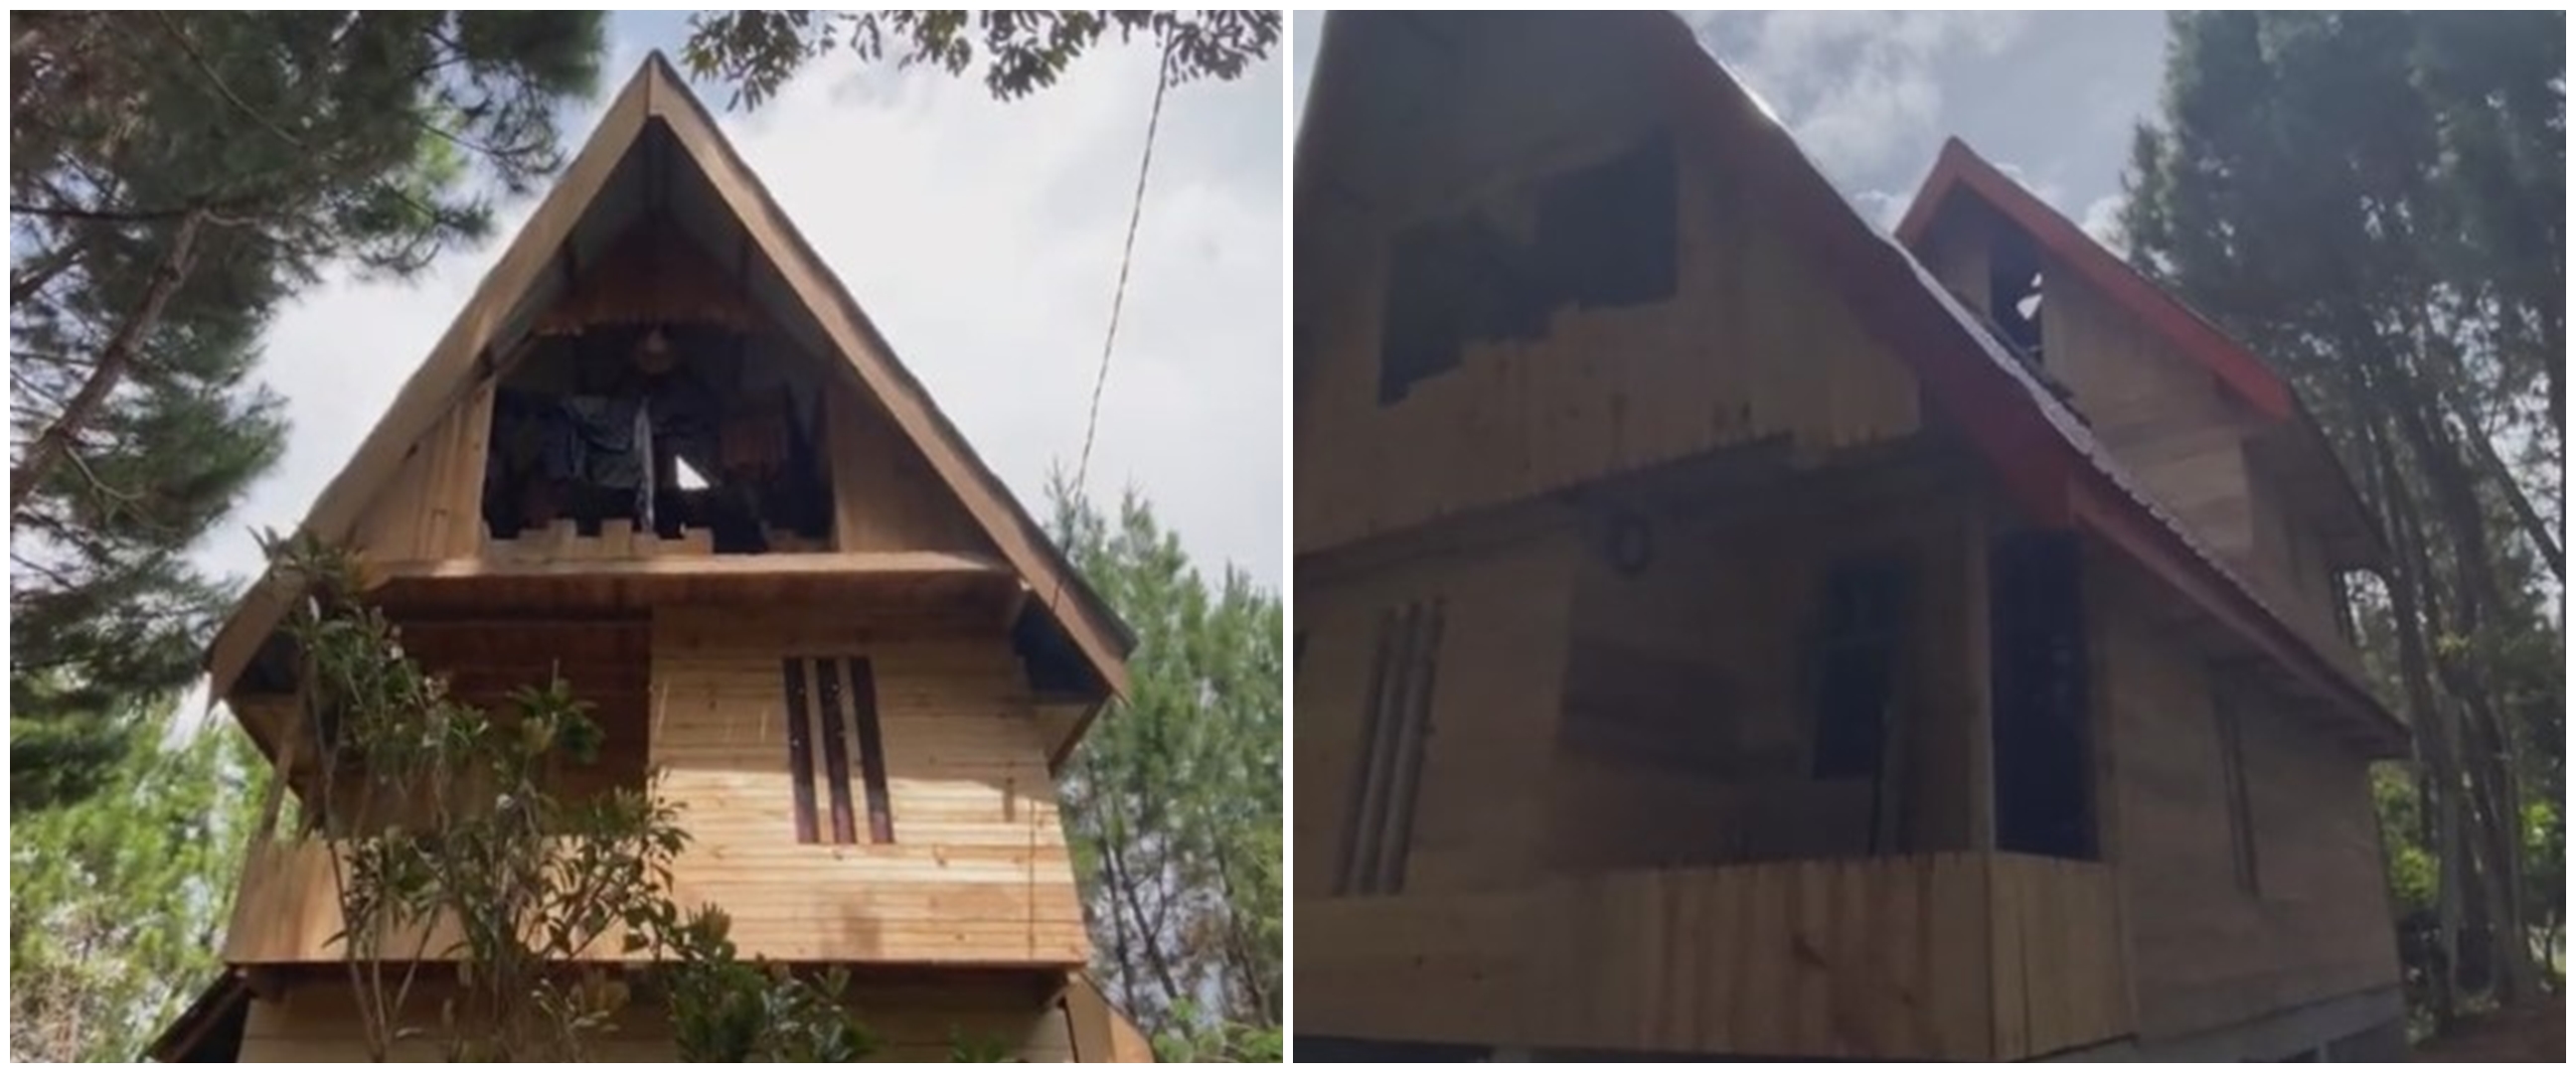 Hidup tanpa tetangga di hutan, ini 11 potret rumah kayu mungil interiornya estetik meski sederhana